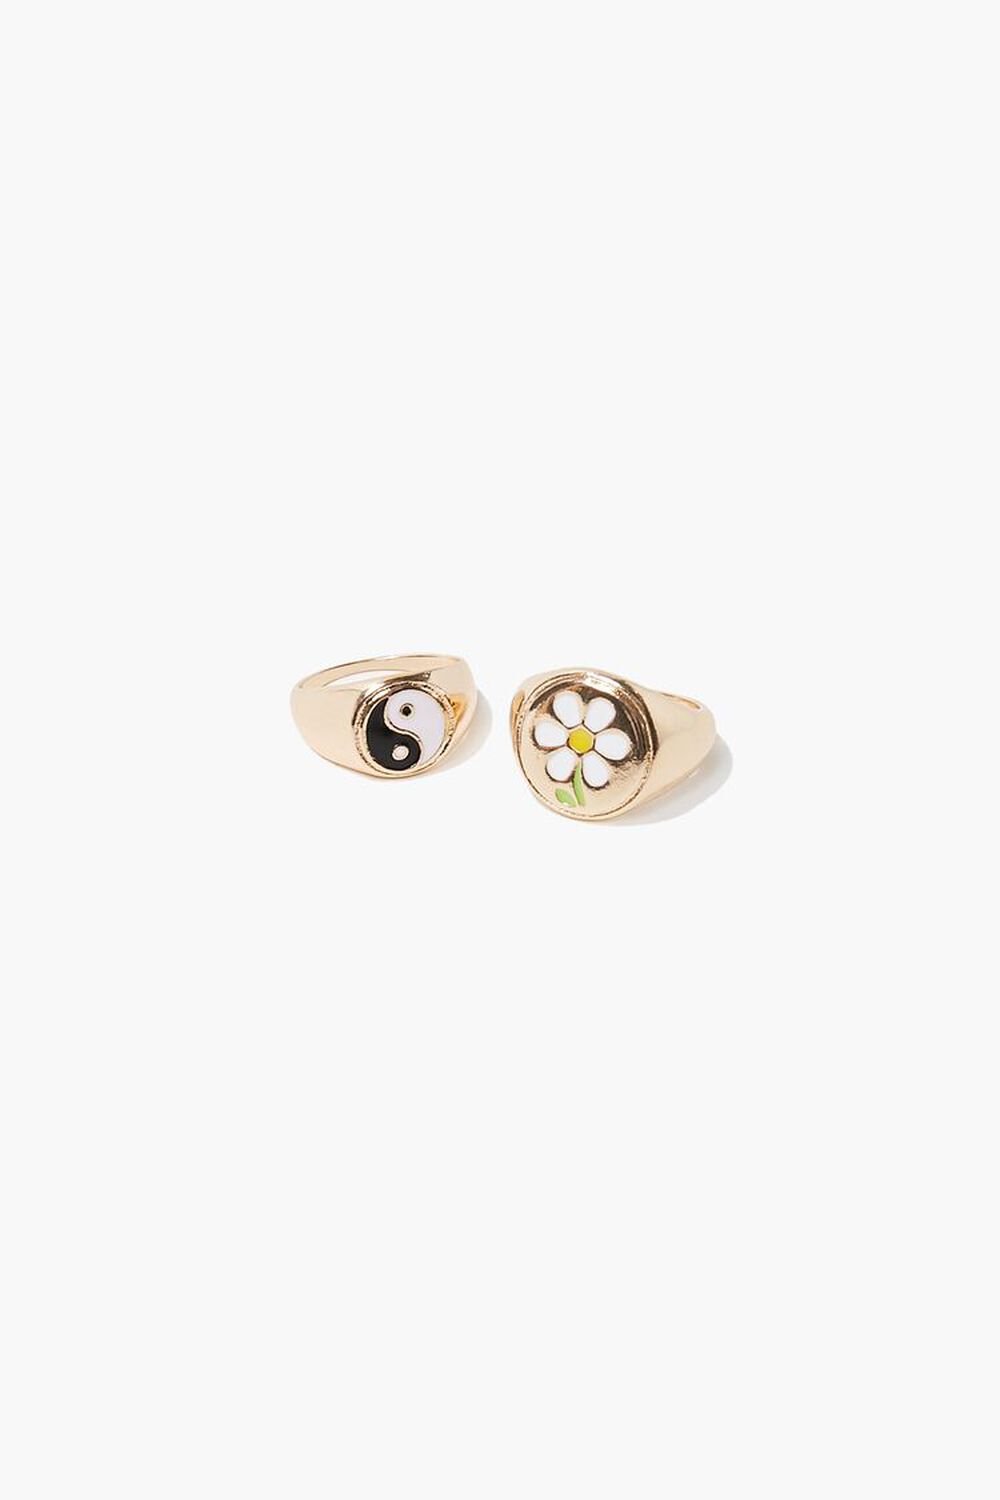 GOLD Yin-Yang & Daisy Charm Ring Set, image 1